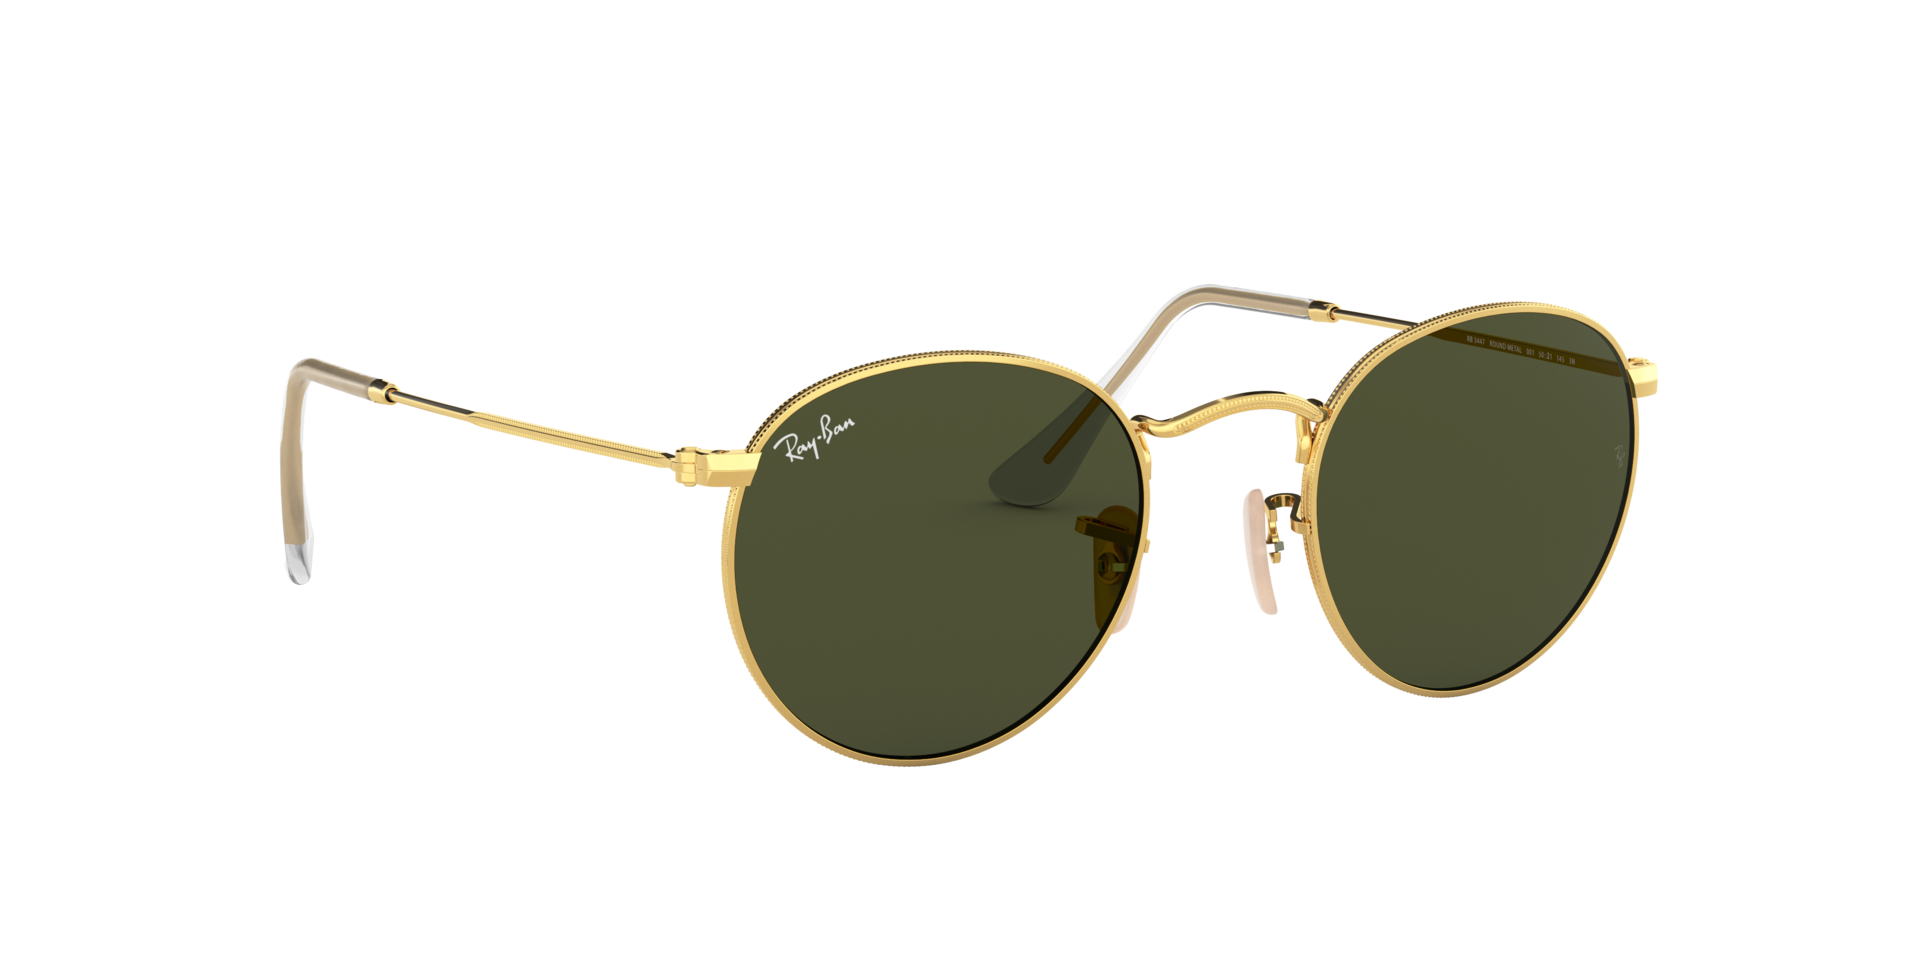 Buy Ray-Ban Round Sunglasses Online.